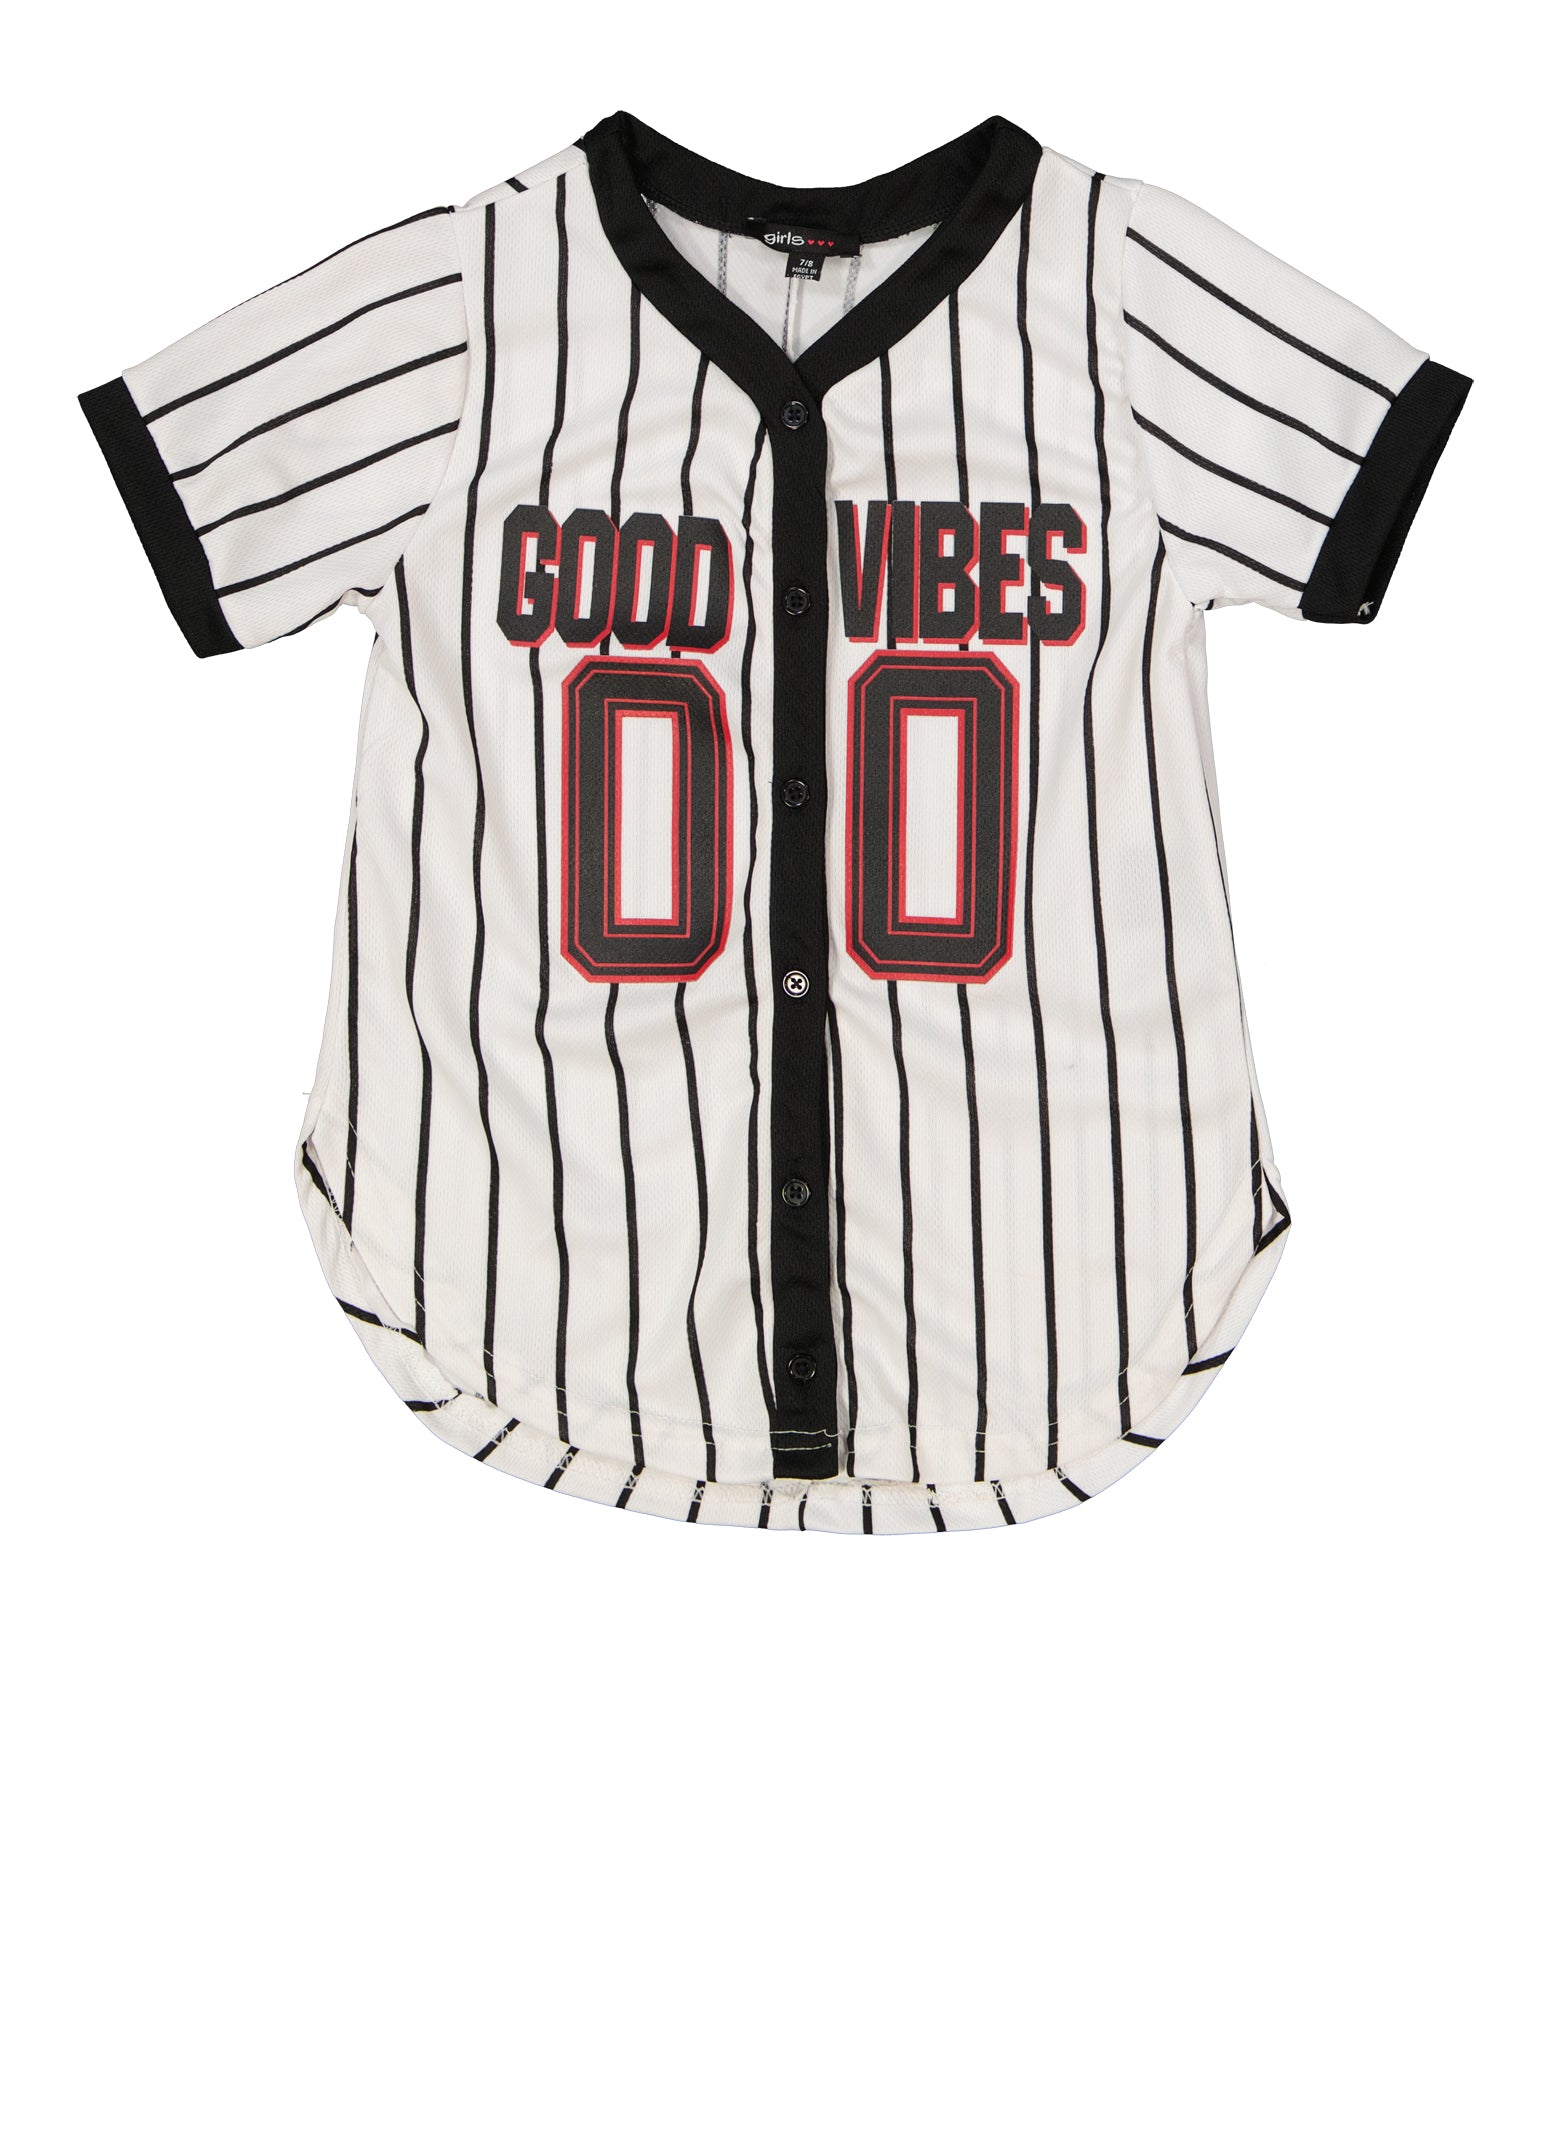 Good Vibes Graphic Baseball Jersey